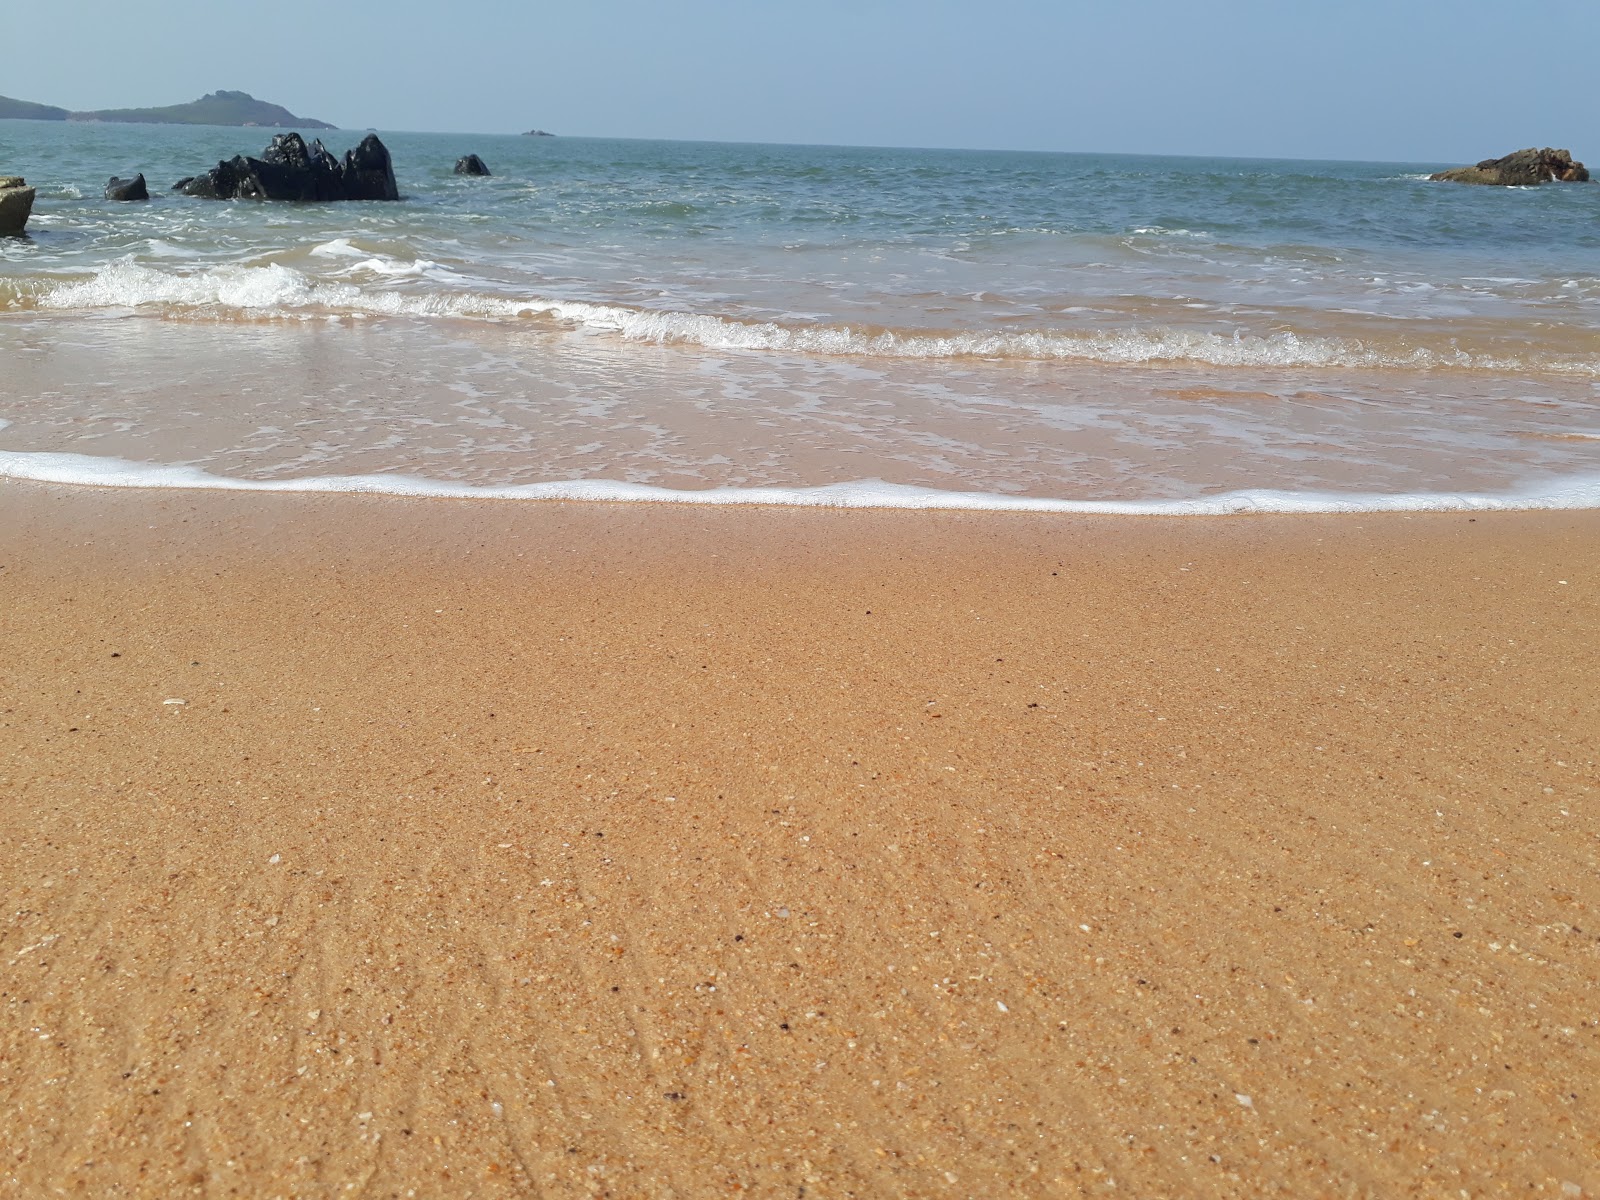 Fotografija Nadibhag beach nahaja se v naravnem okolju